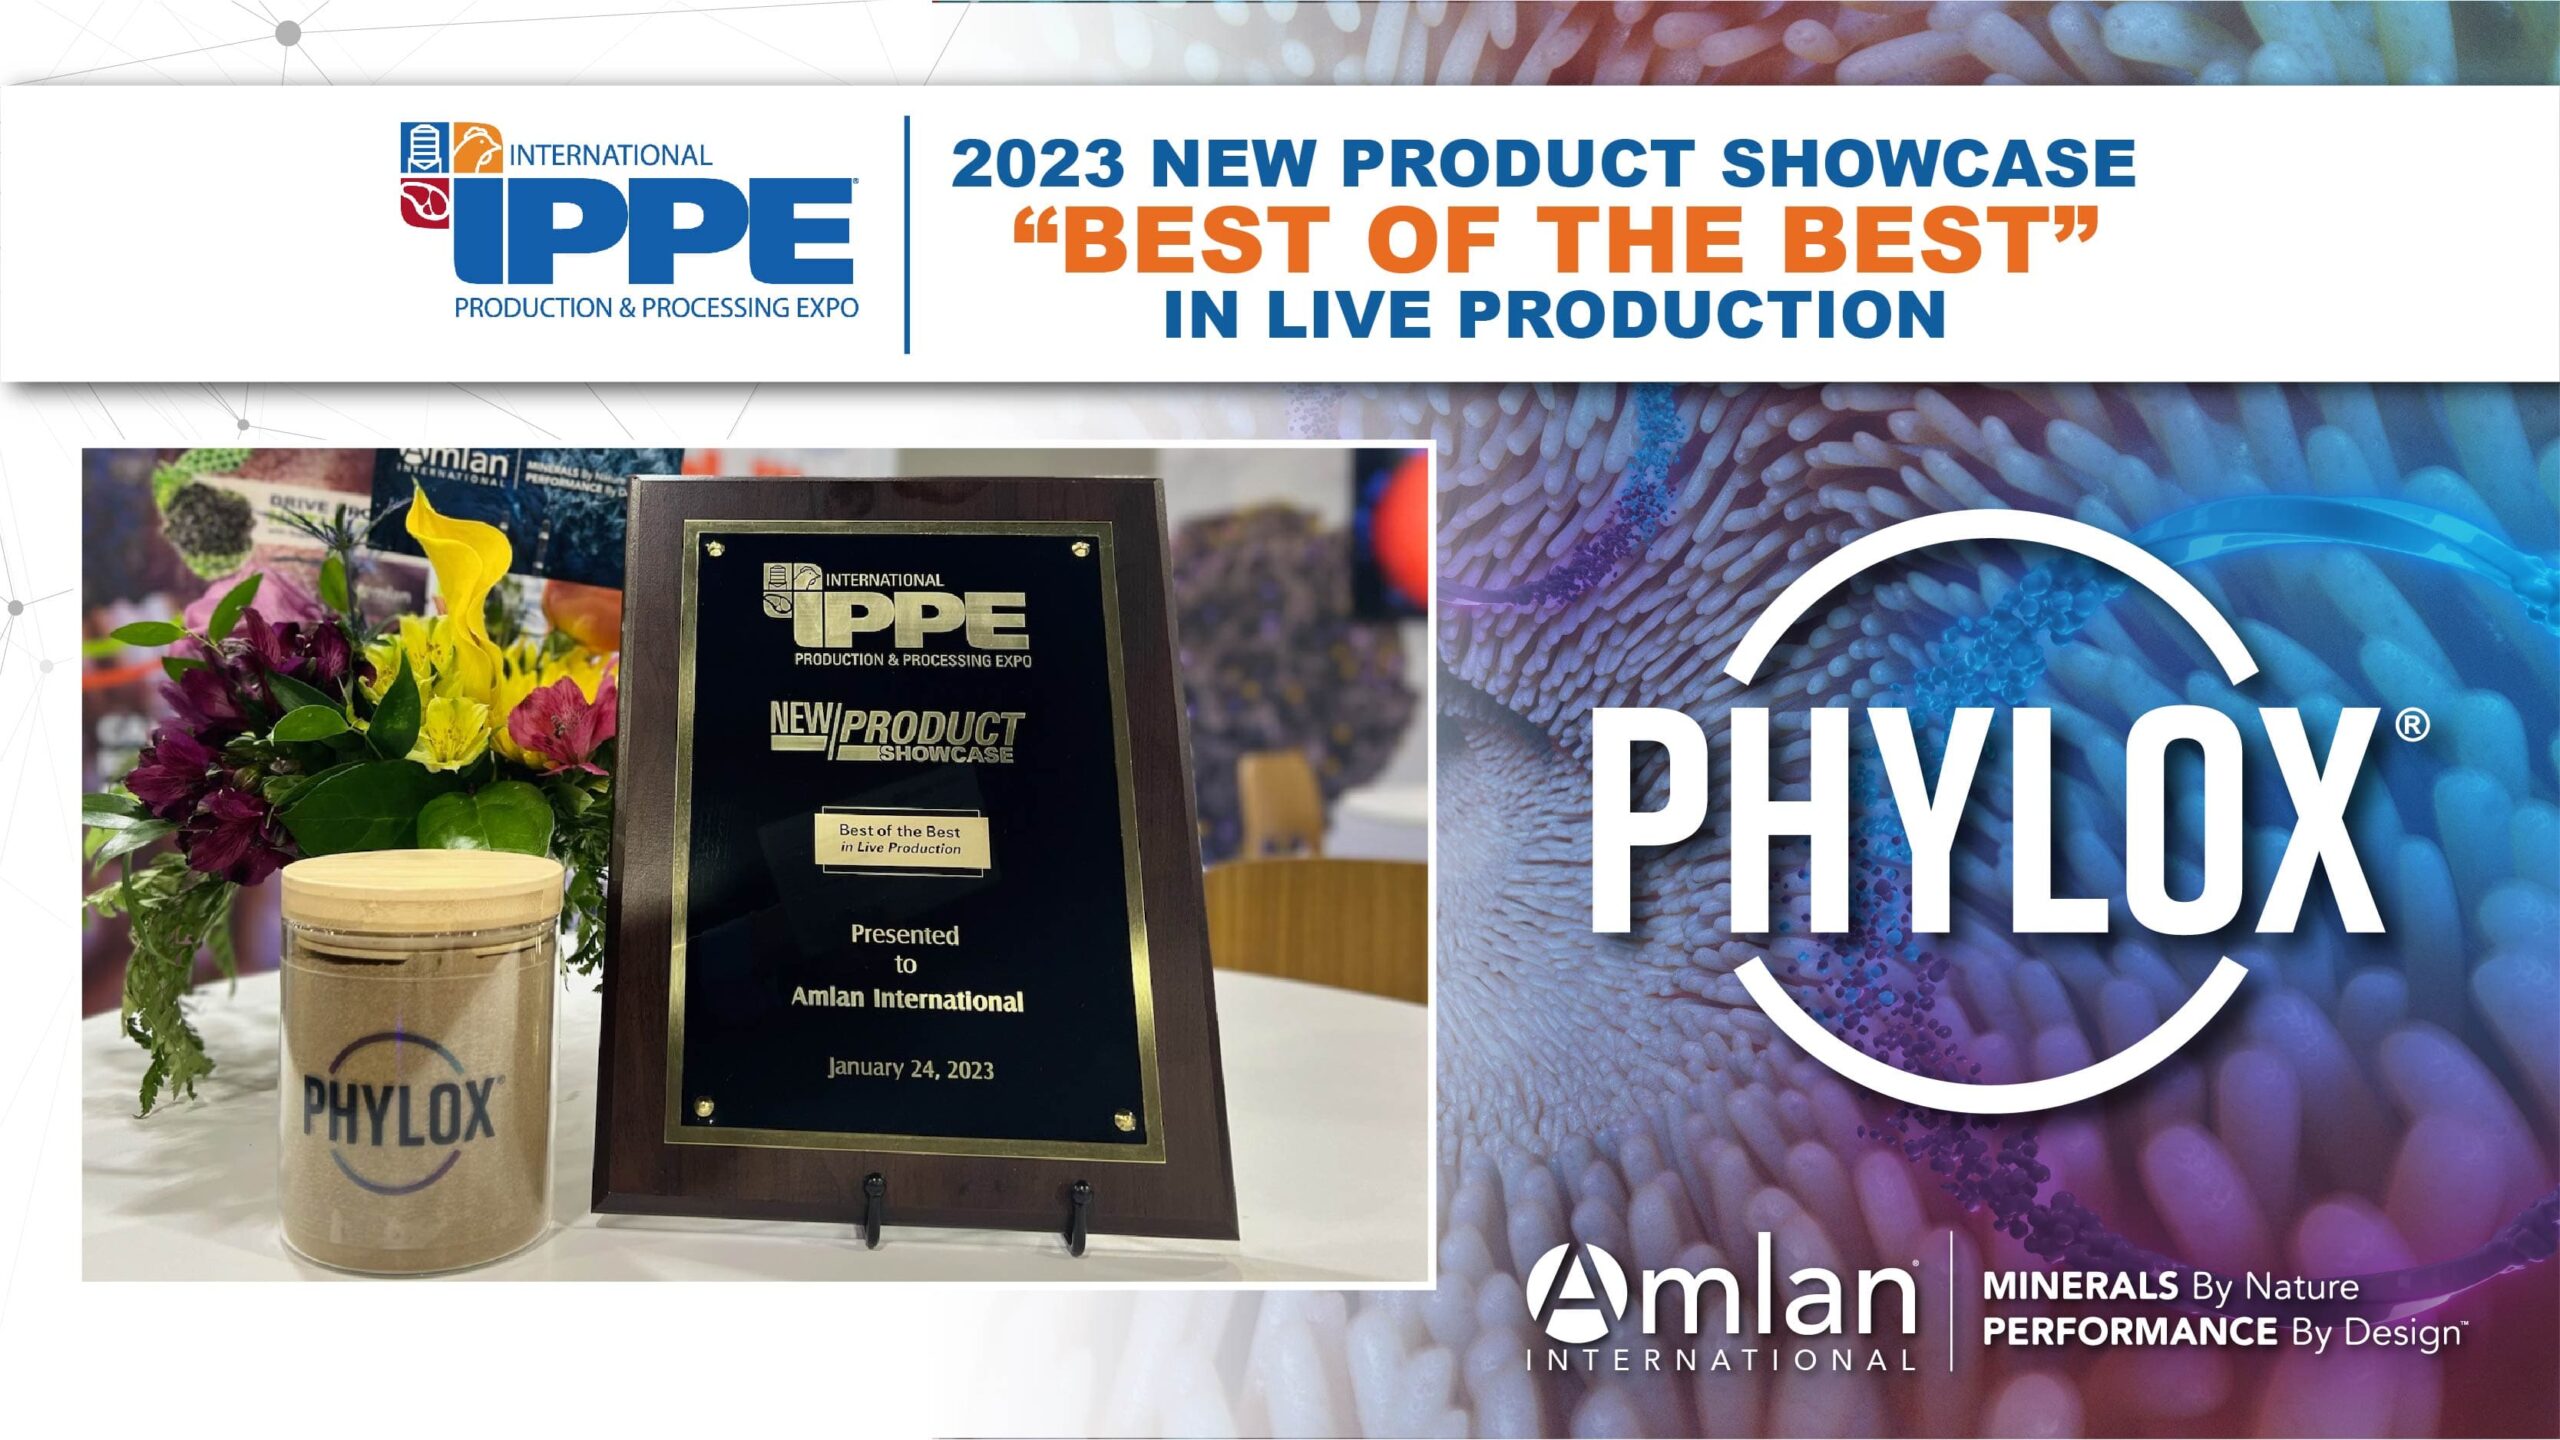 Phylox new product showcase award.